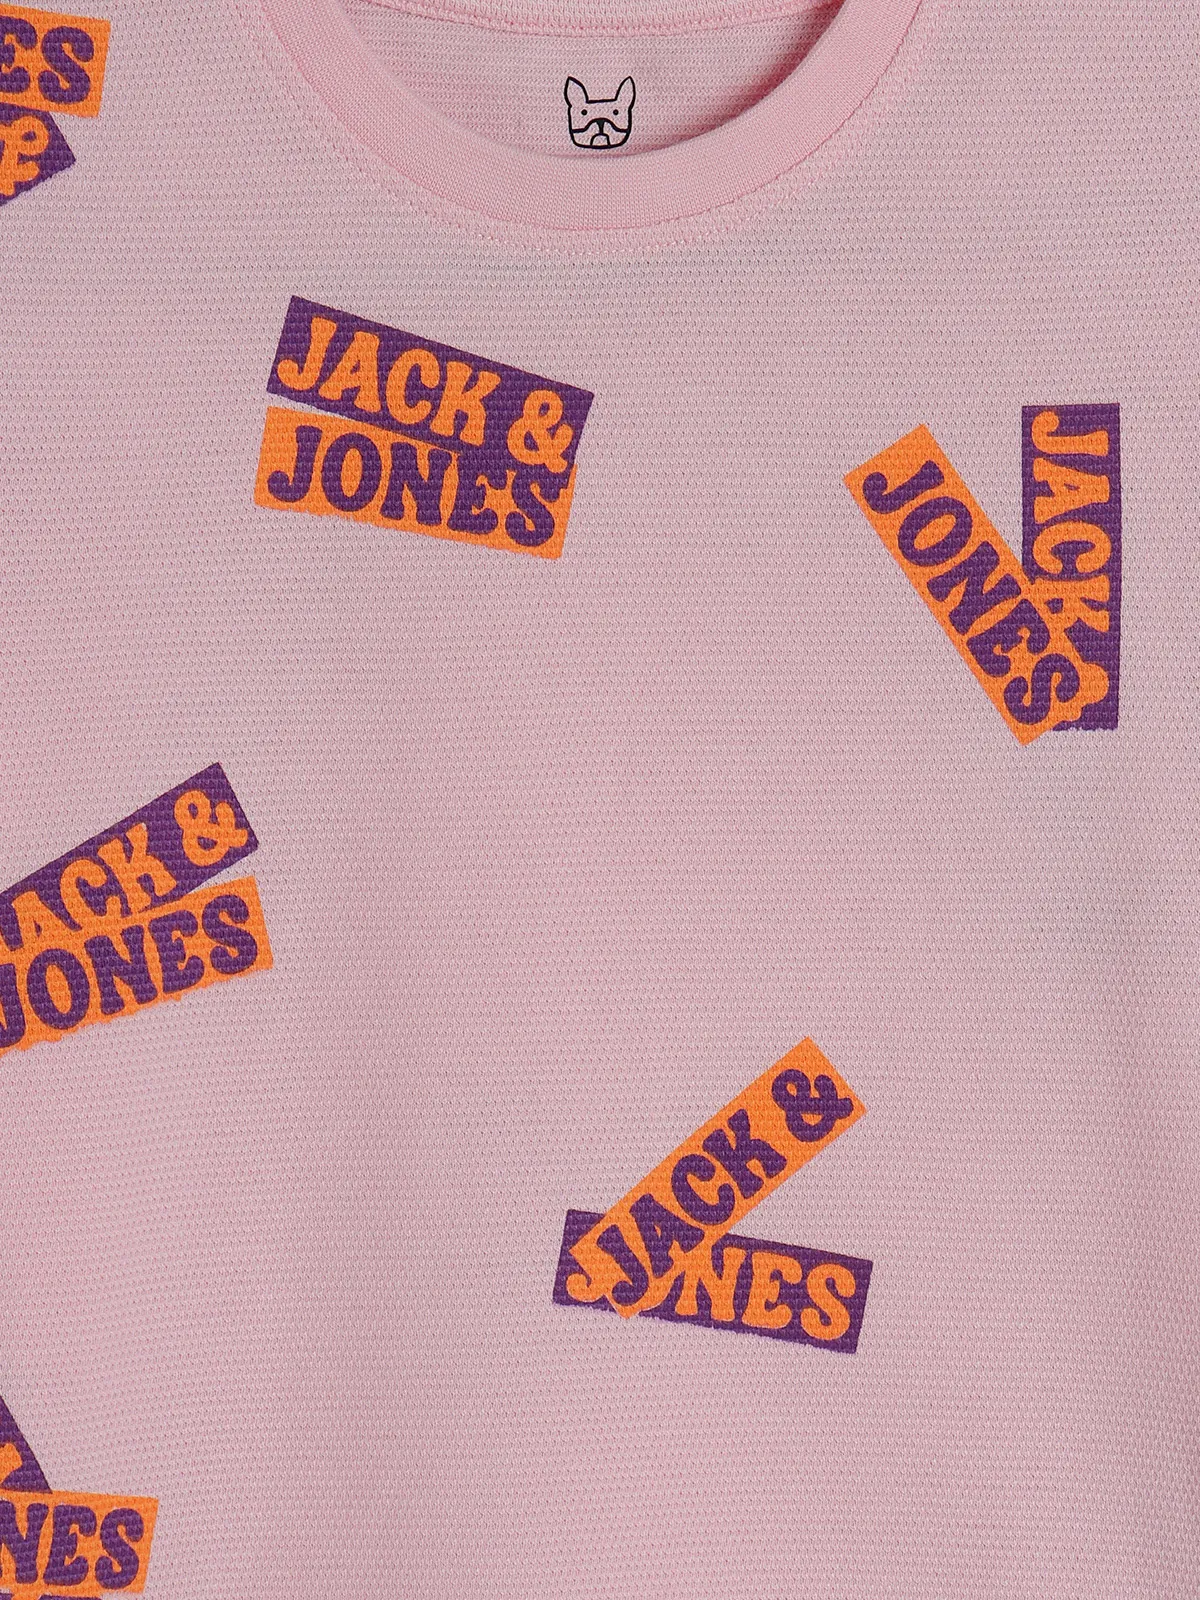 JACK&JONES pink printed cotton t-shirt